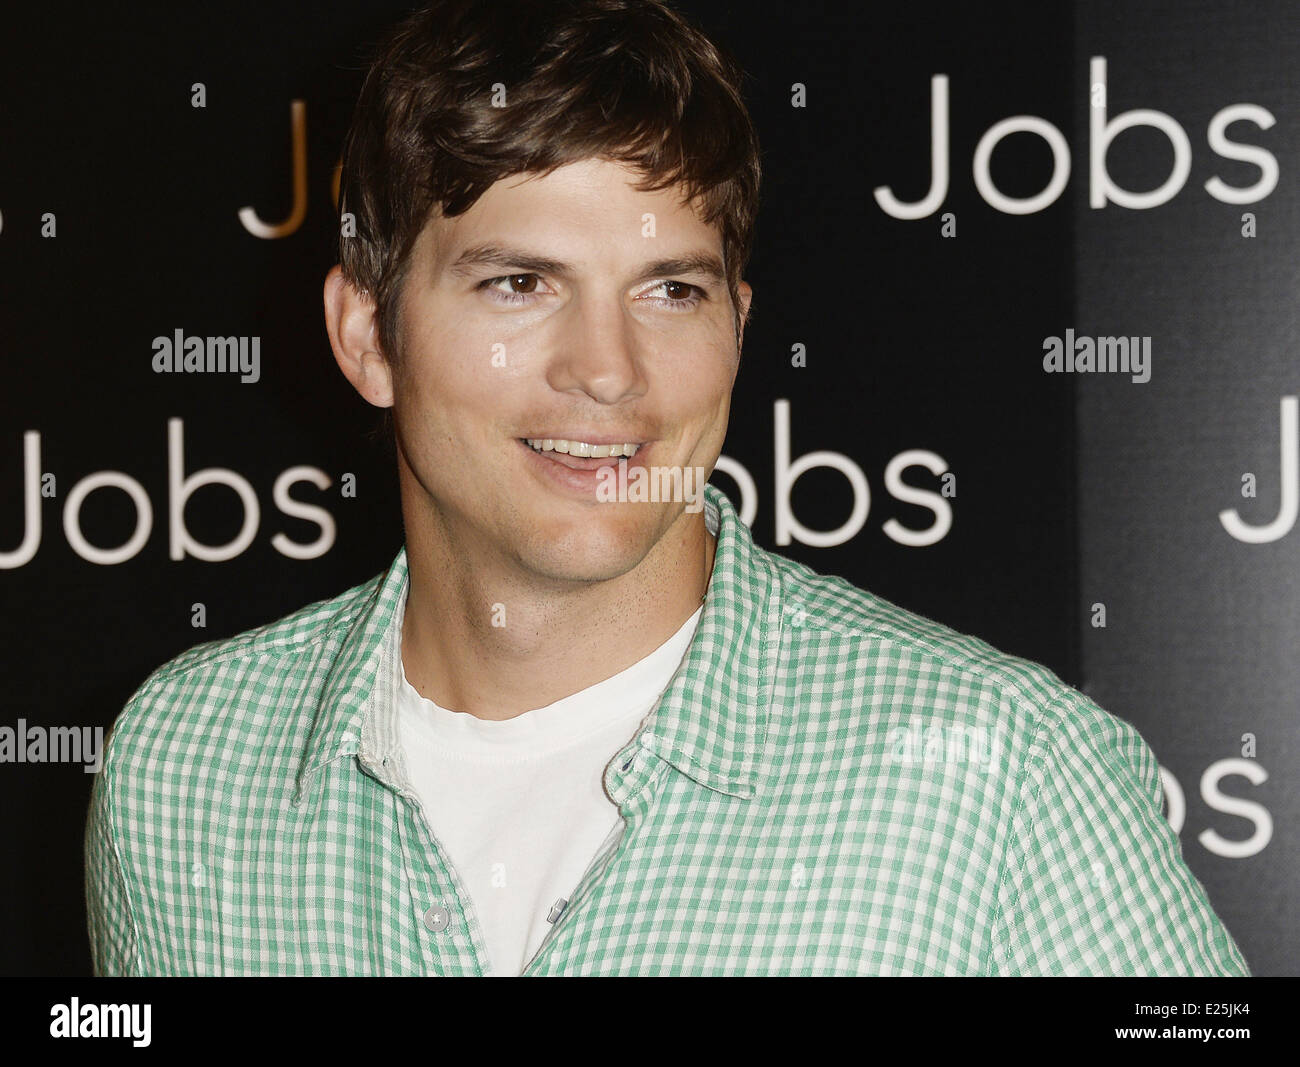 Photocall for 'Jobs' at Hotel Park Hyatt Paris Vendome  Featuring: Ashton Kutcher Where: Paris, France When: 01 Jul 2013 Stock Photo